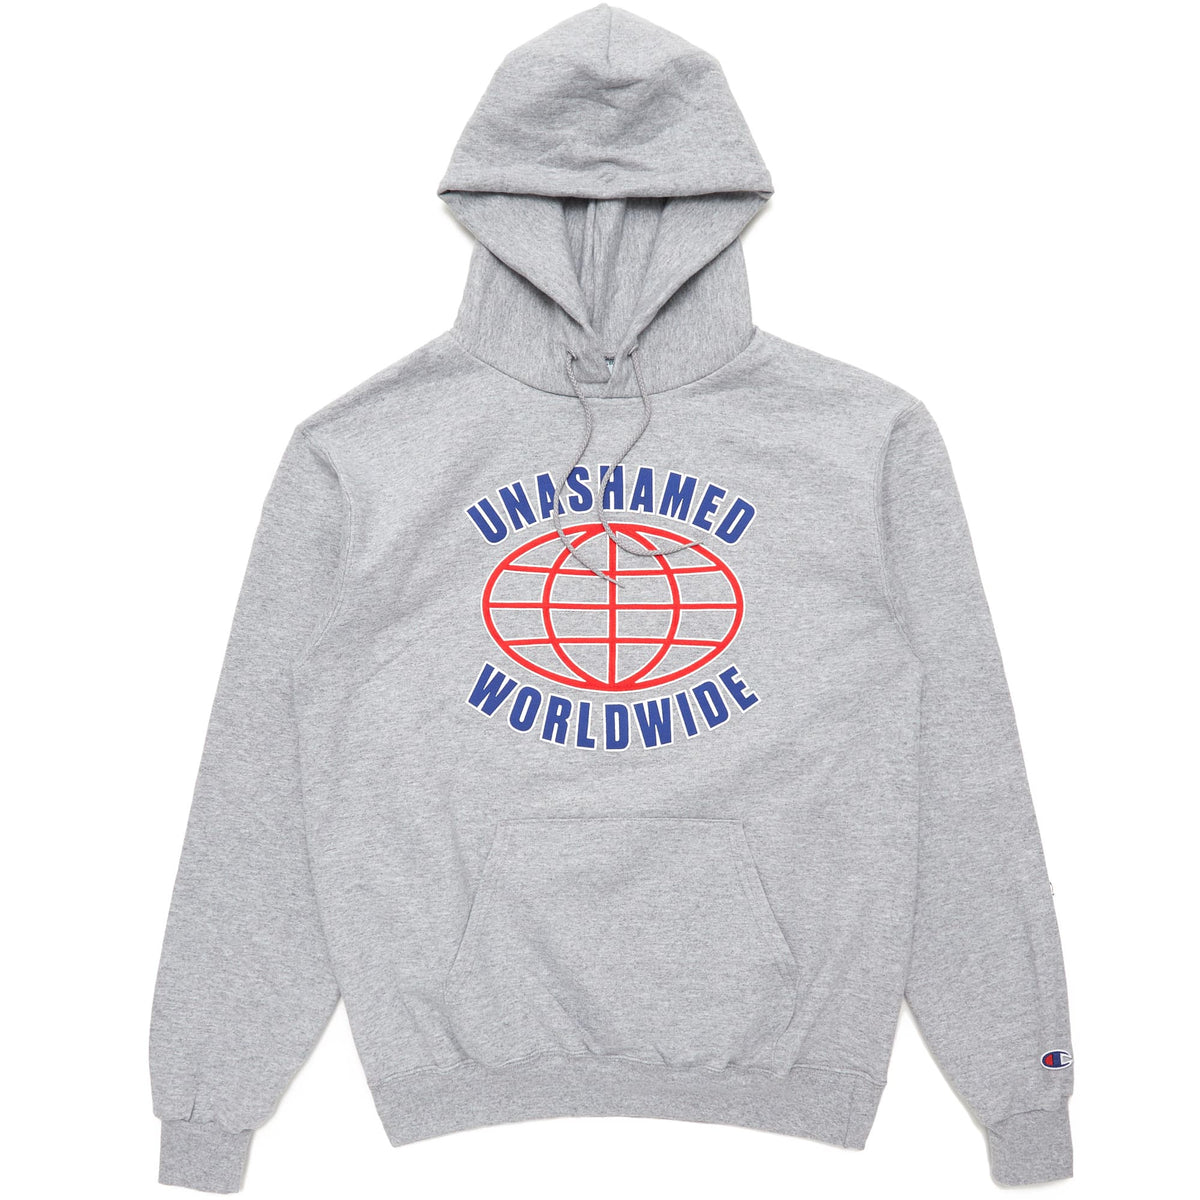 worldwide champions hoodie